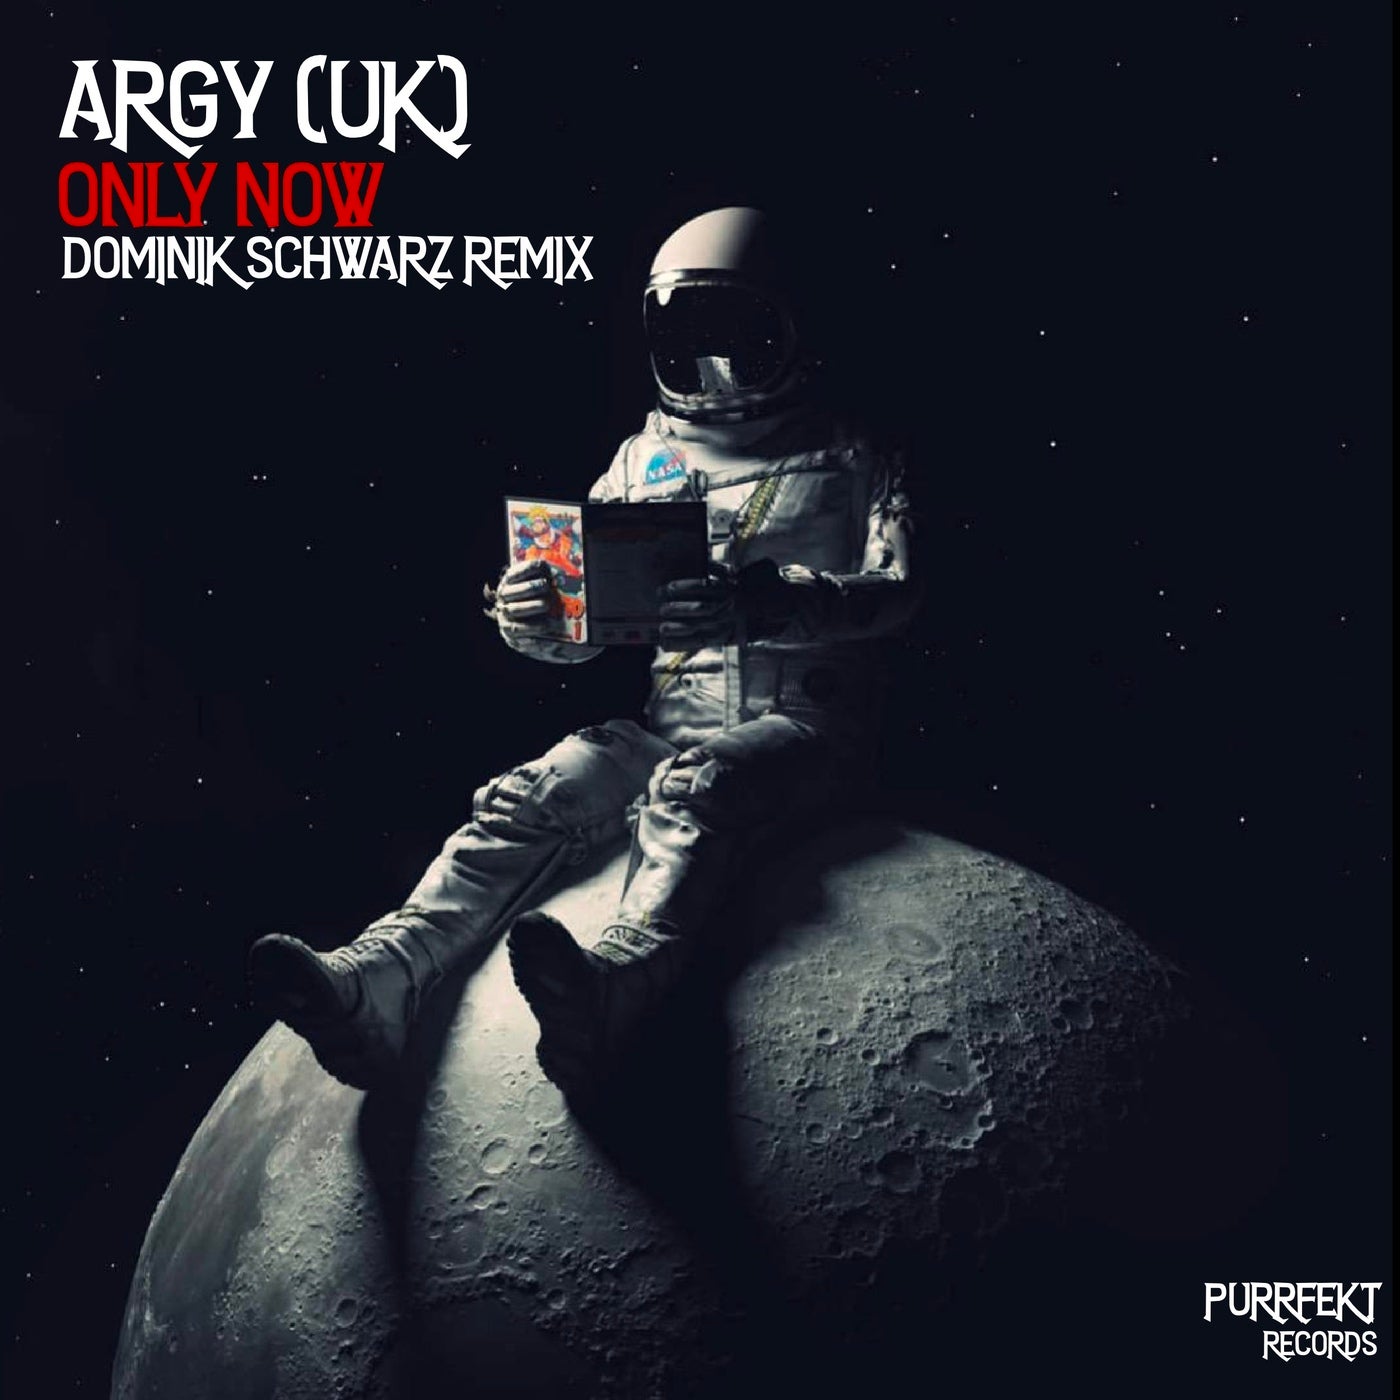 Argy (UK) - Only Now - Dominik Schwarz Remix [PR005]